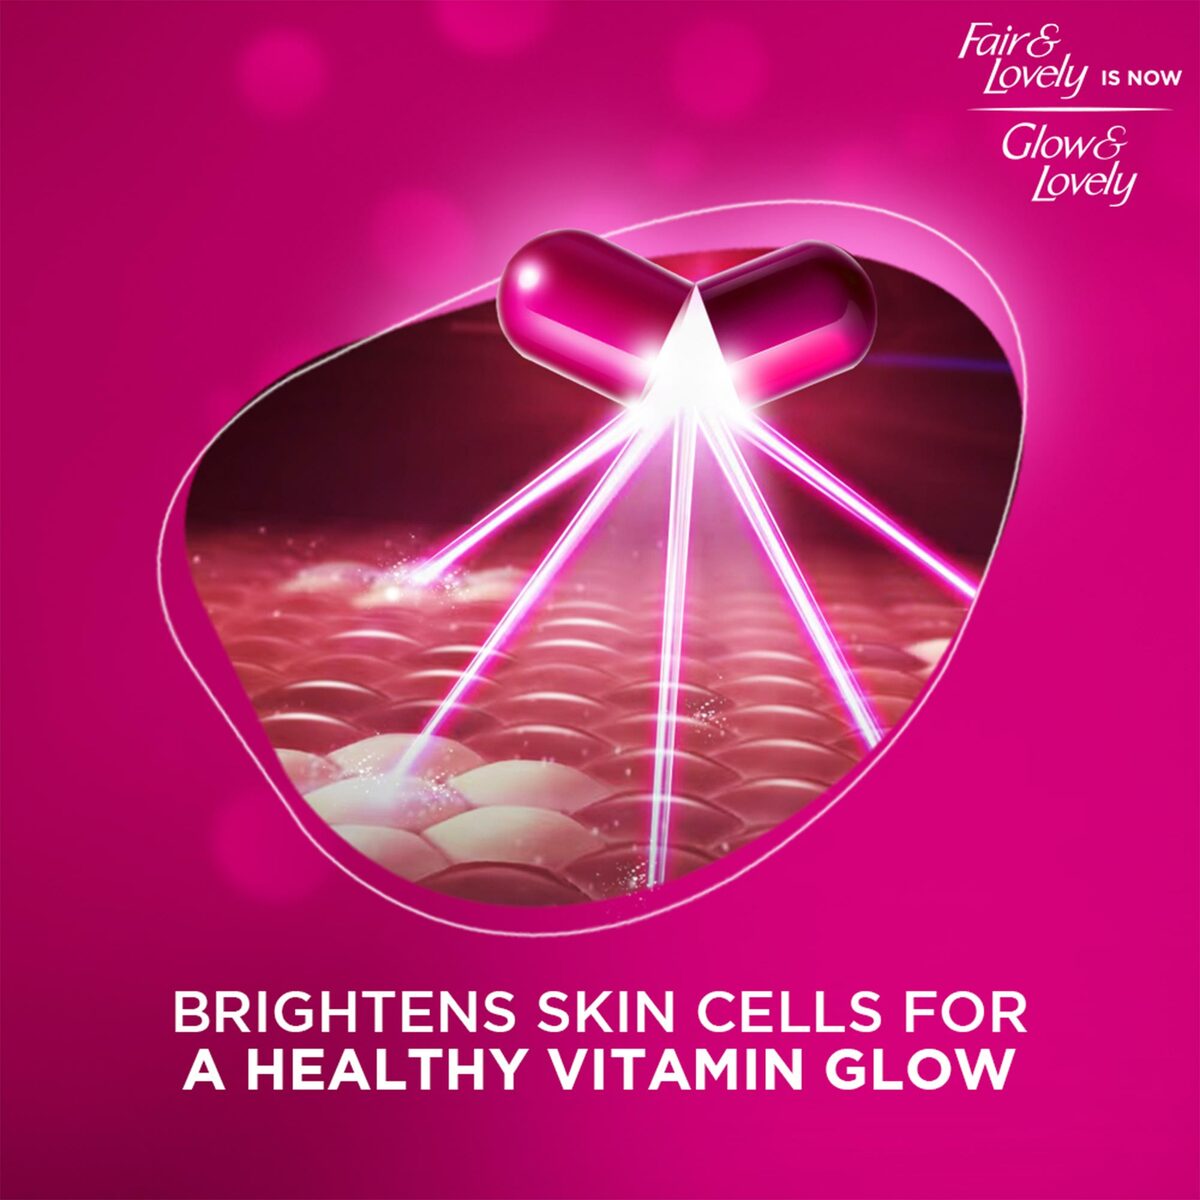 Glow & Lovely Face Cream Advanced Multi-Vitamin Vita Glow 80 g